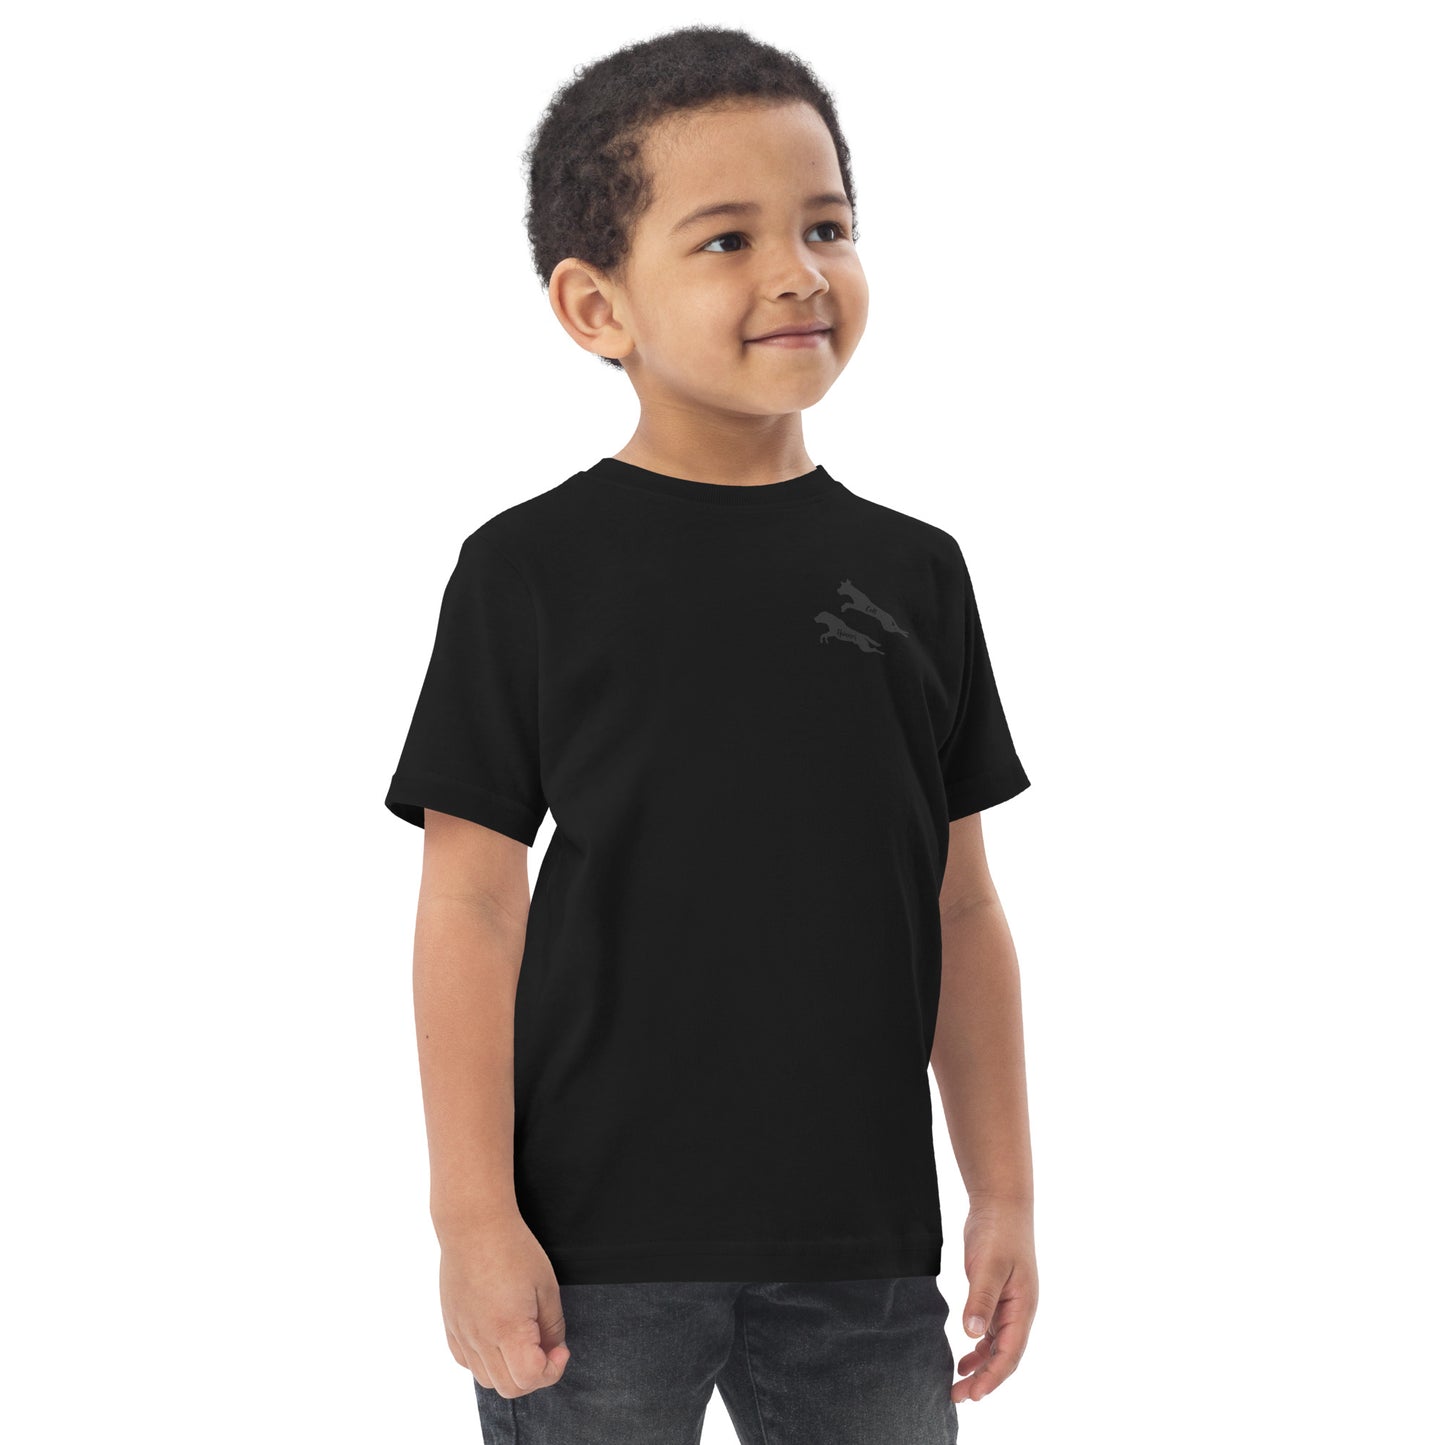 DUCKS & DOCKS Toddler jersey t-shirt